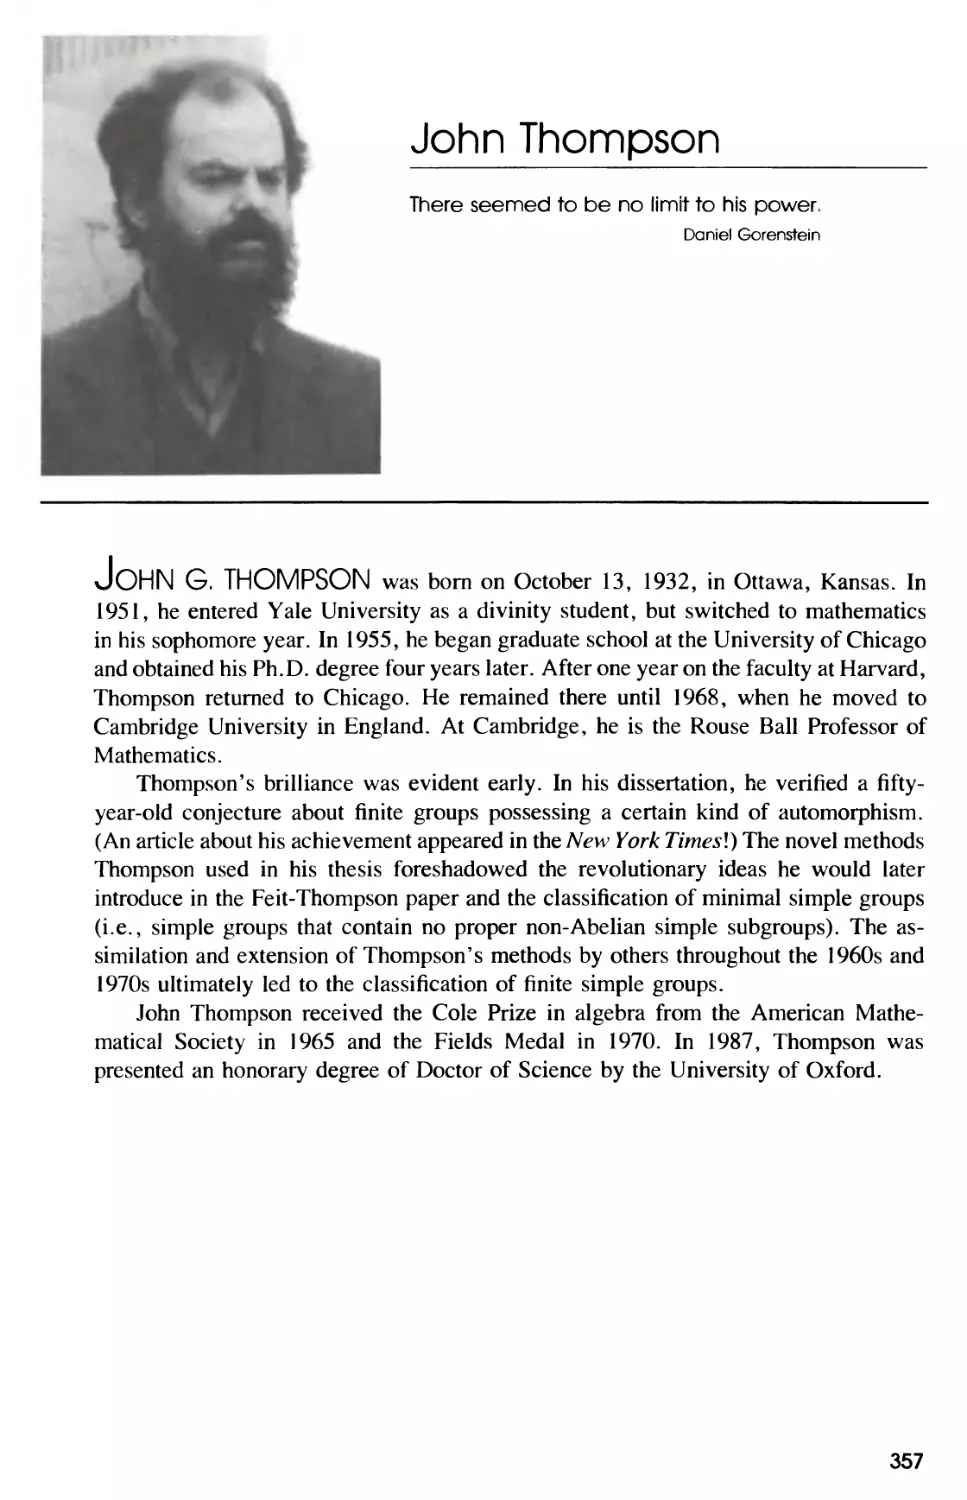 Biography of John Thompson